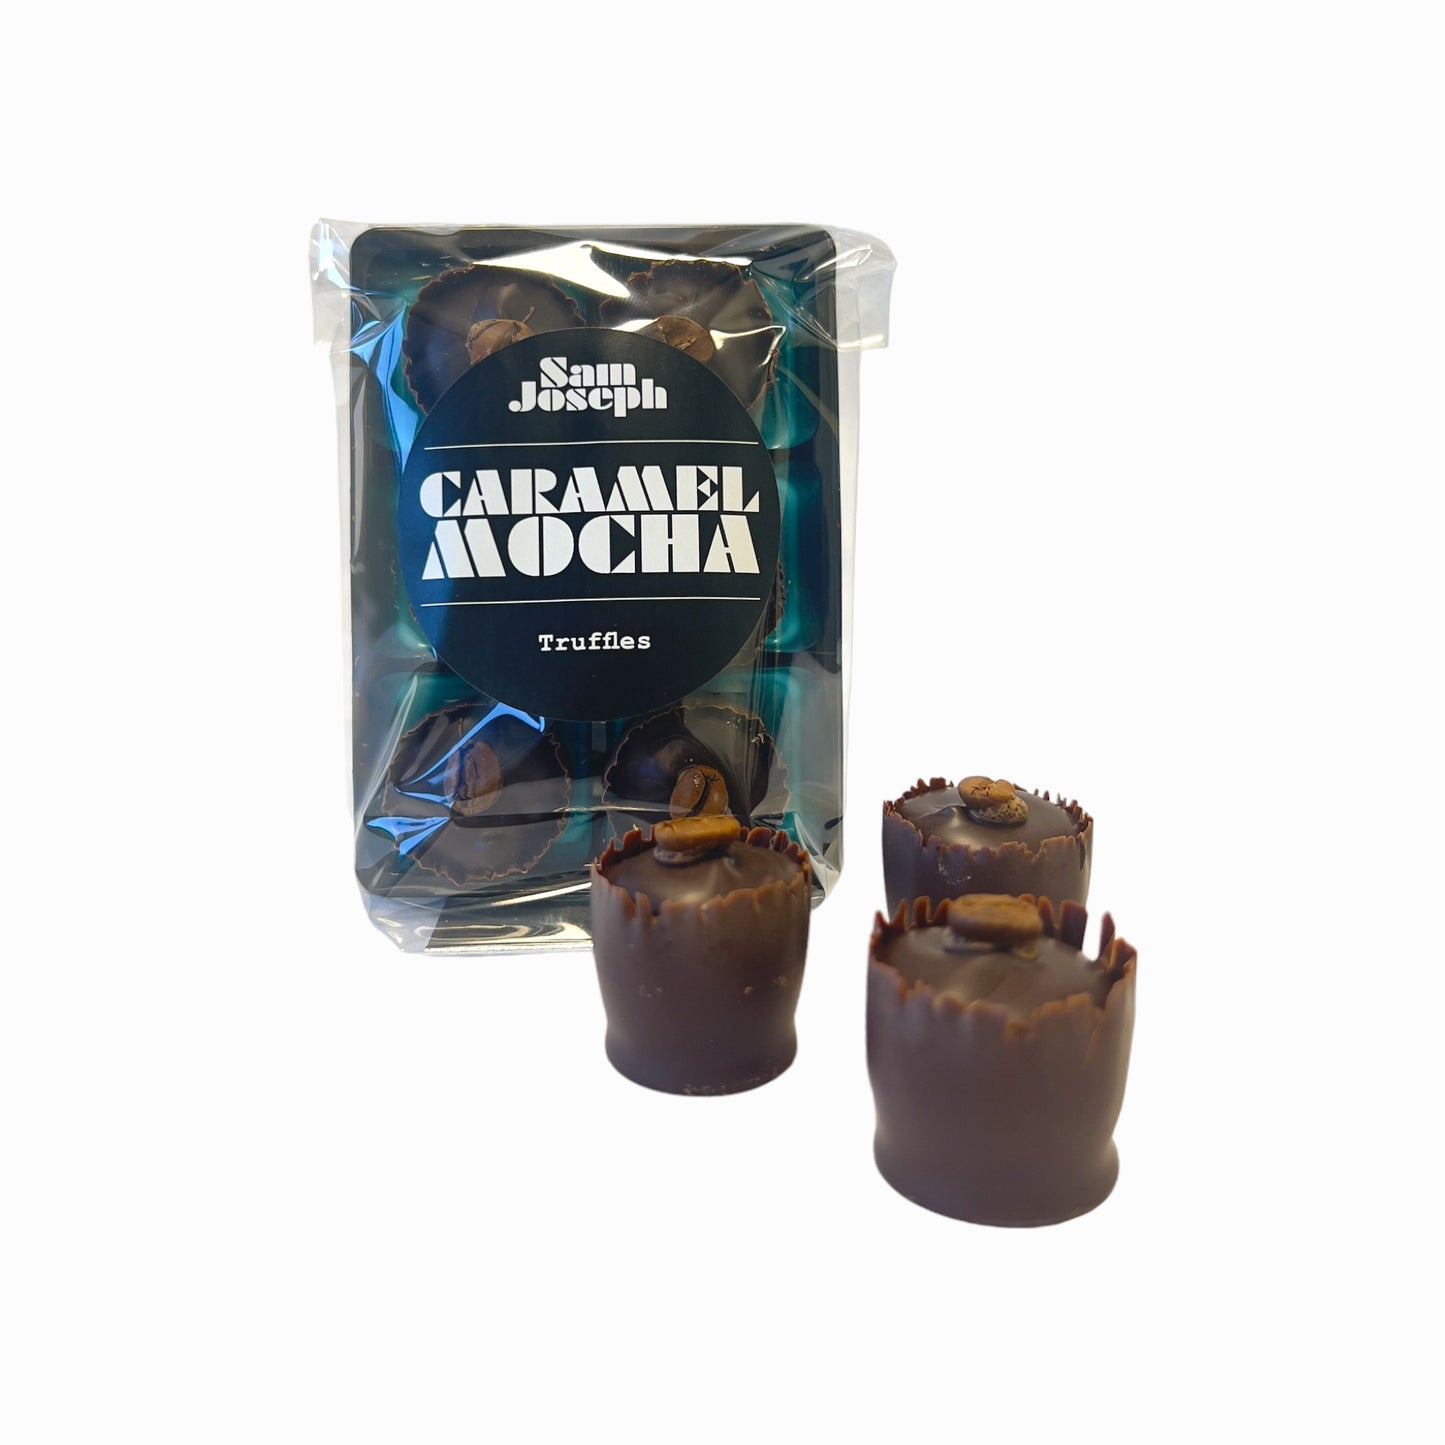 Caramel mocha truffles - Sam Joseph chocolates